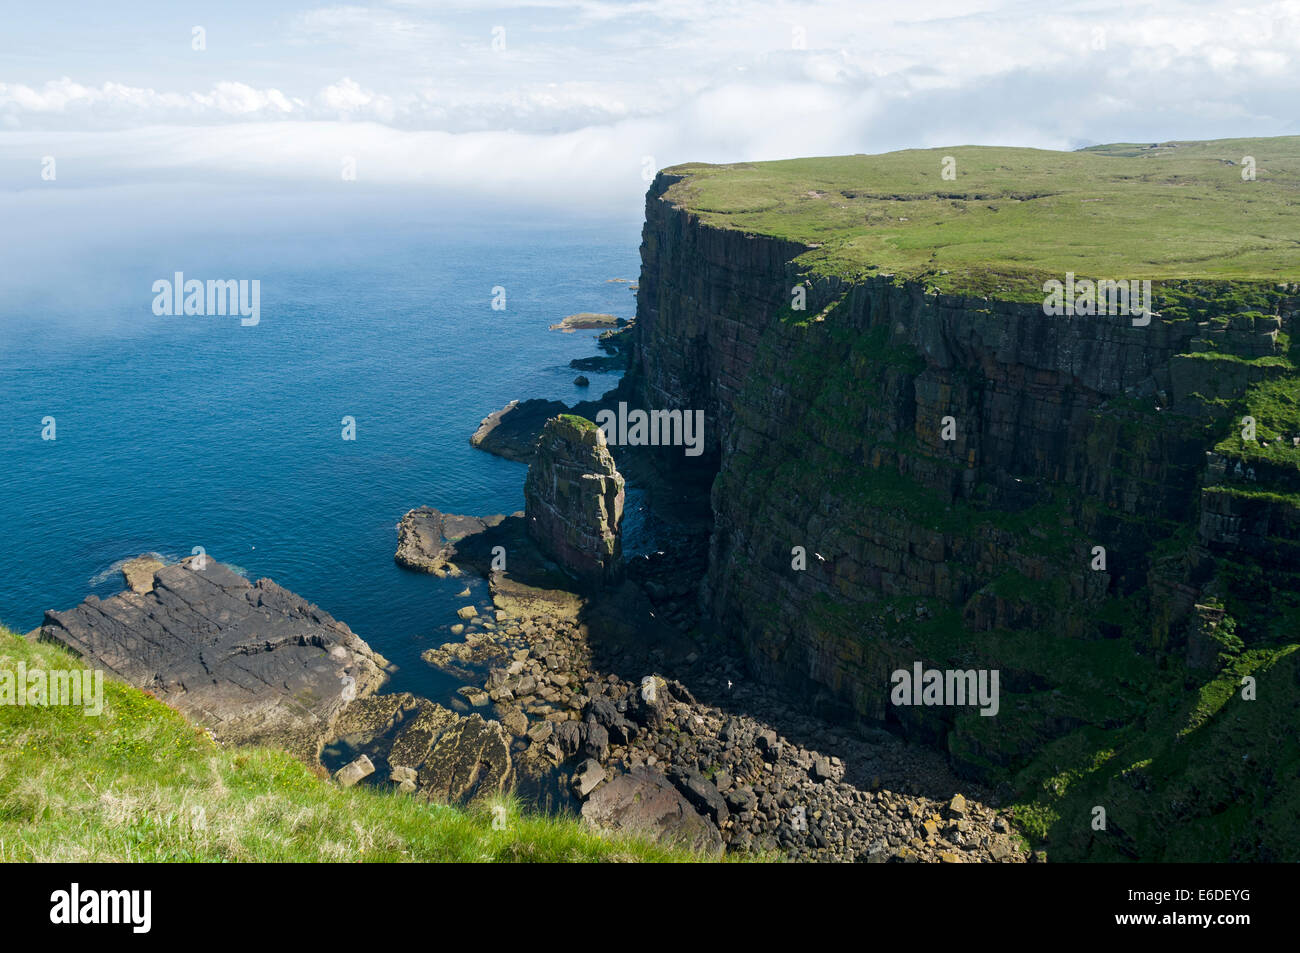 Sea stack and cliffs at Puffin Bay, Handa Island, Sutherland, Scotland, UK Stock Photo